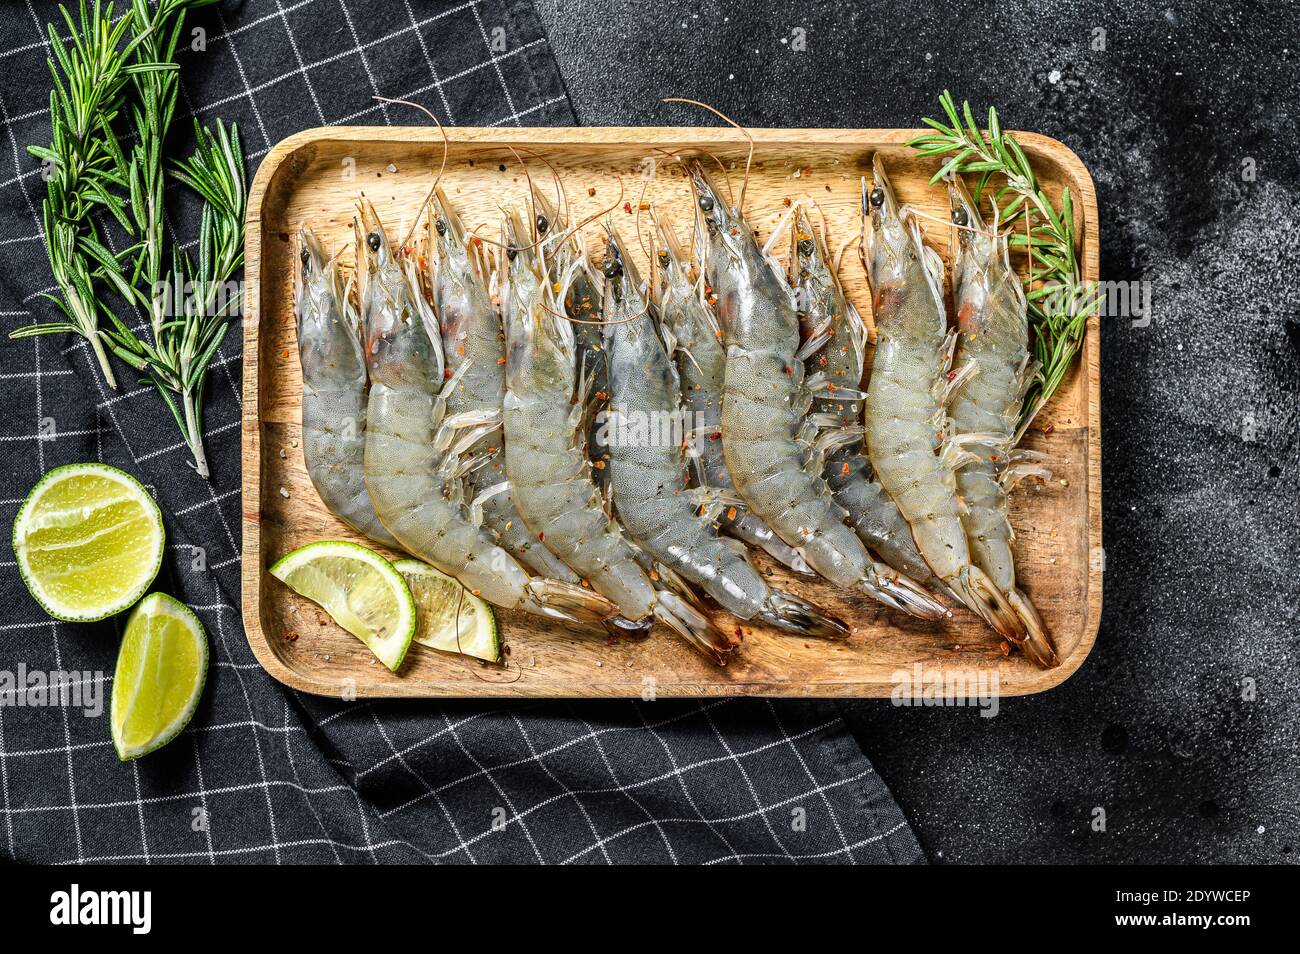 Whole fresh raw langoustine prawns, shrimps on a wooden tray. Black background. Top view Stock Photo